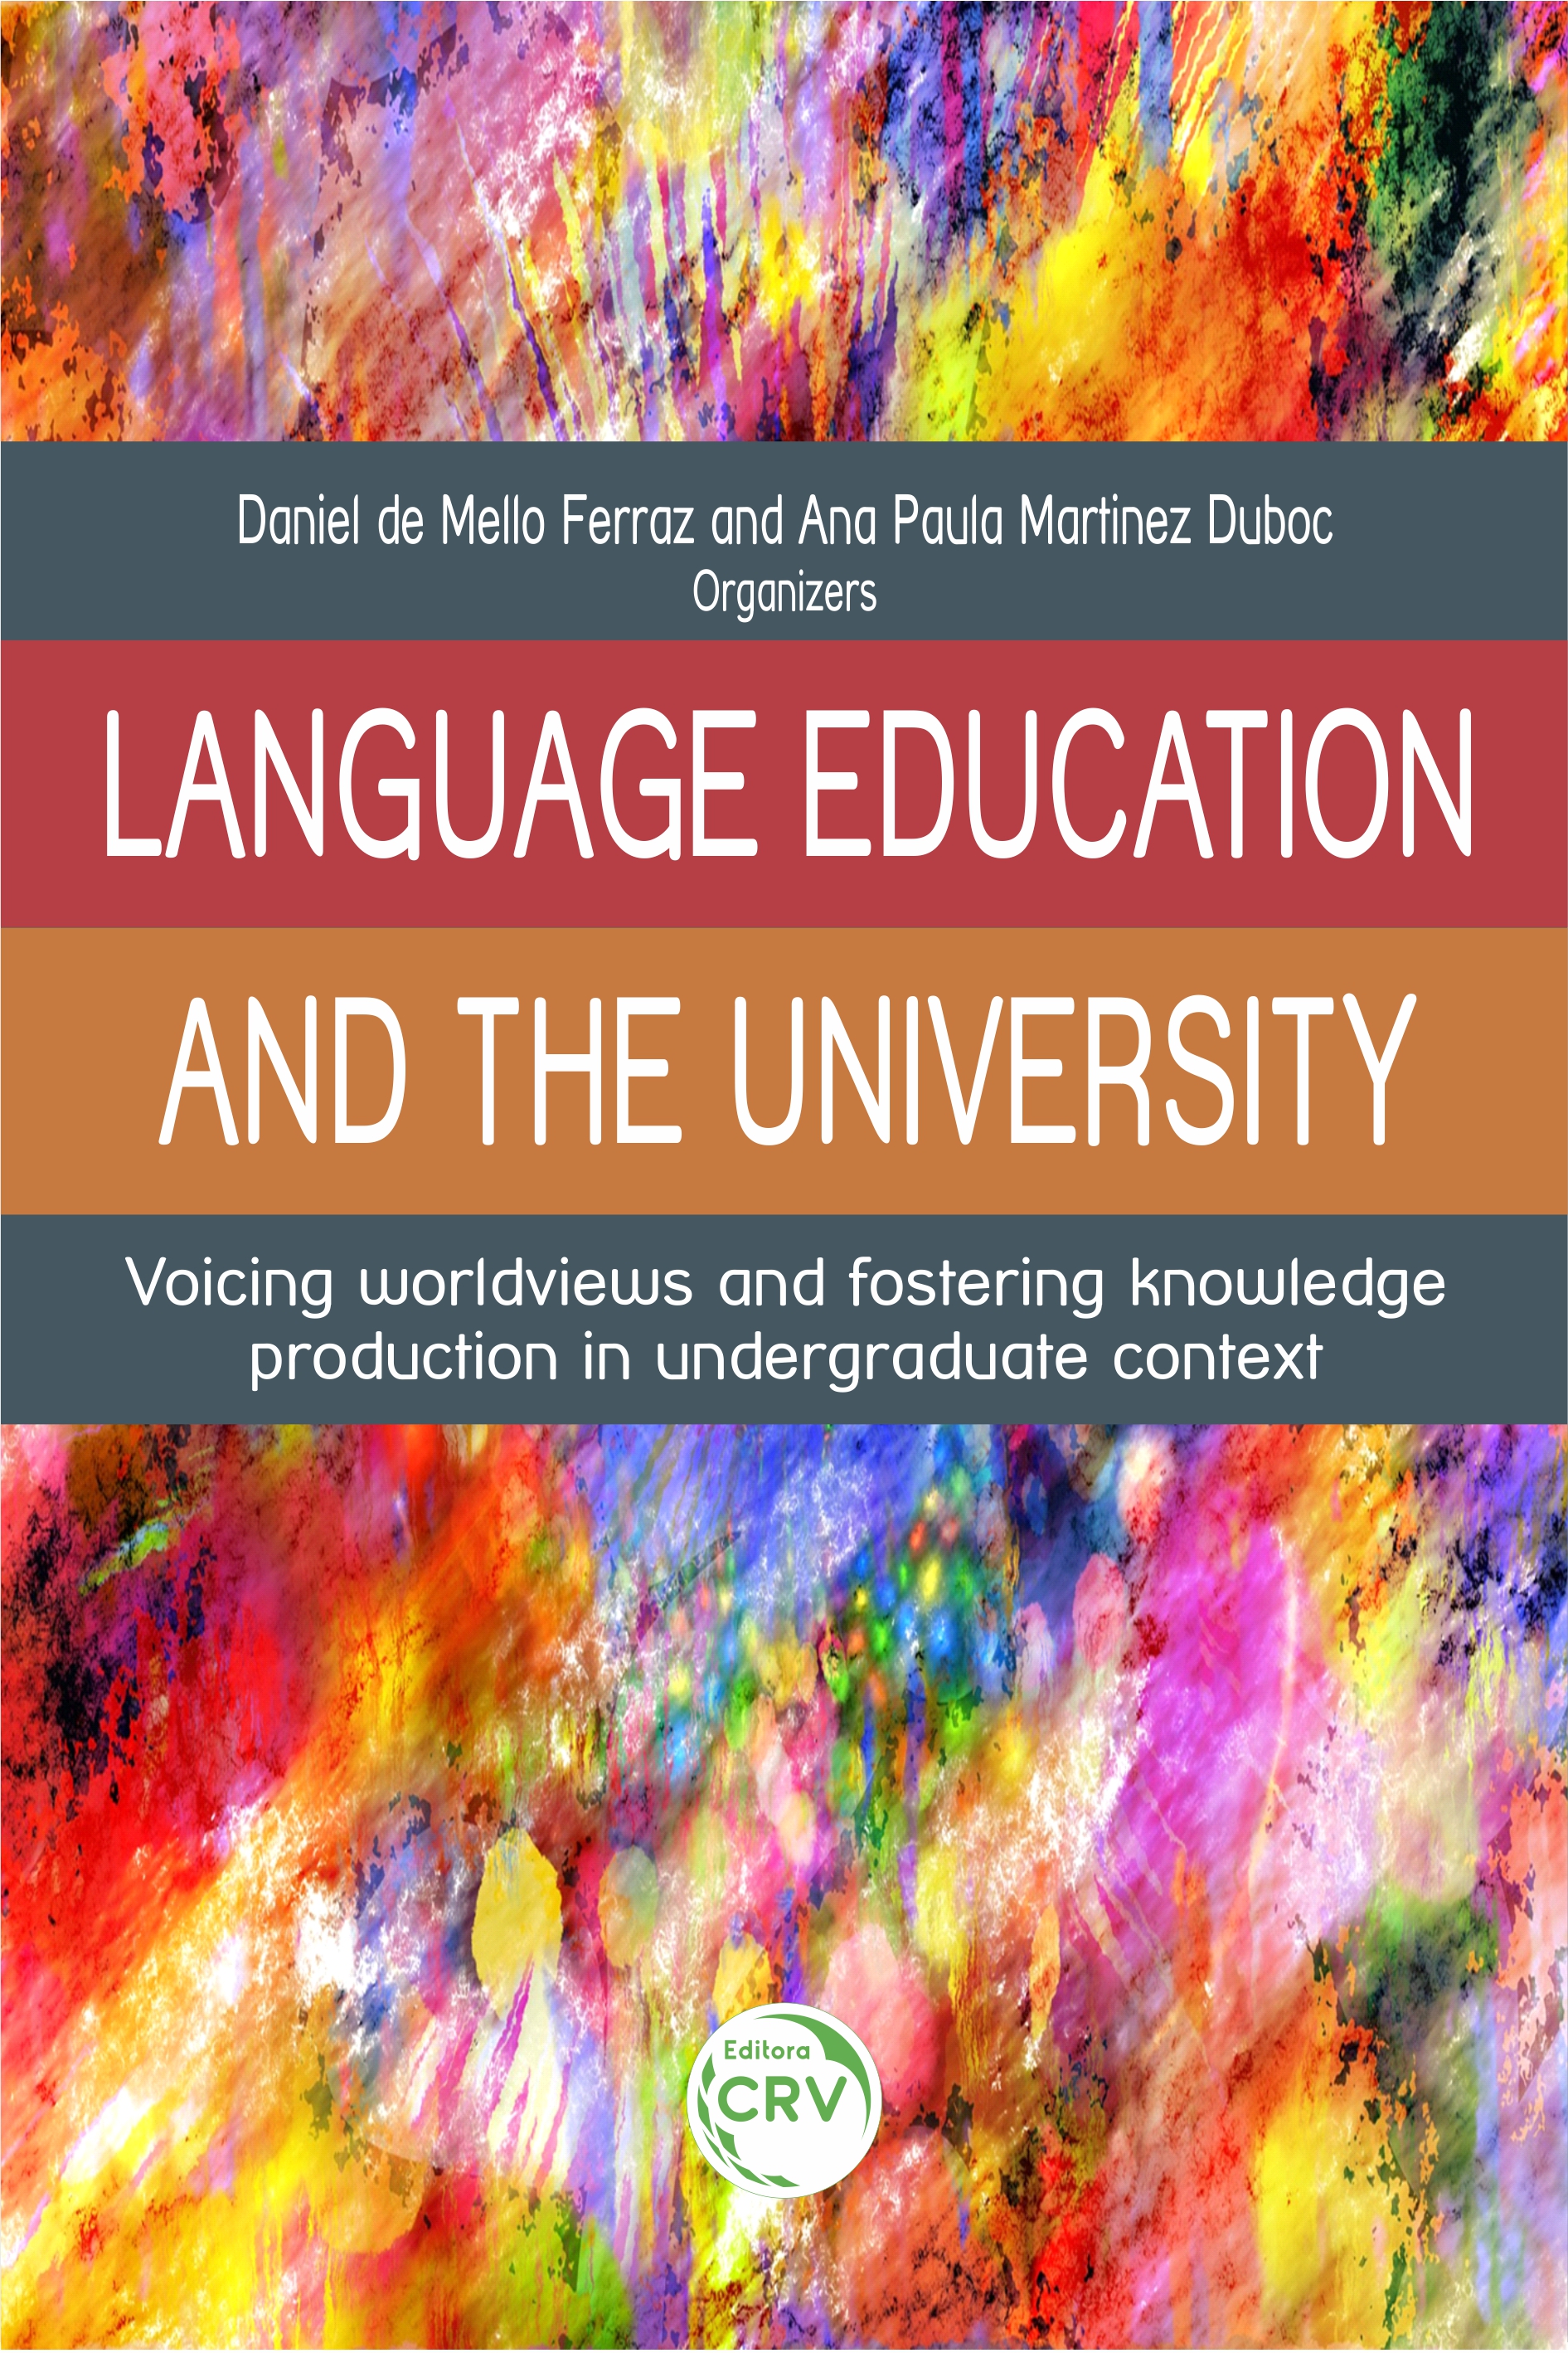 Capa do livro "Language education and the university"